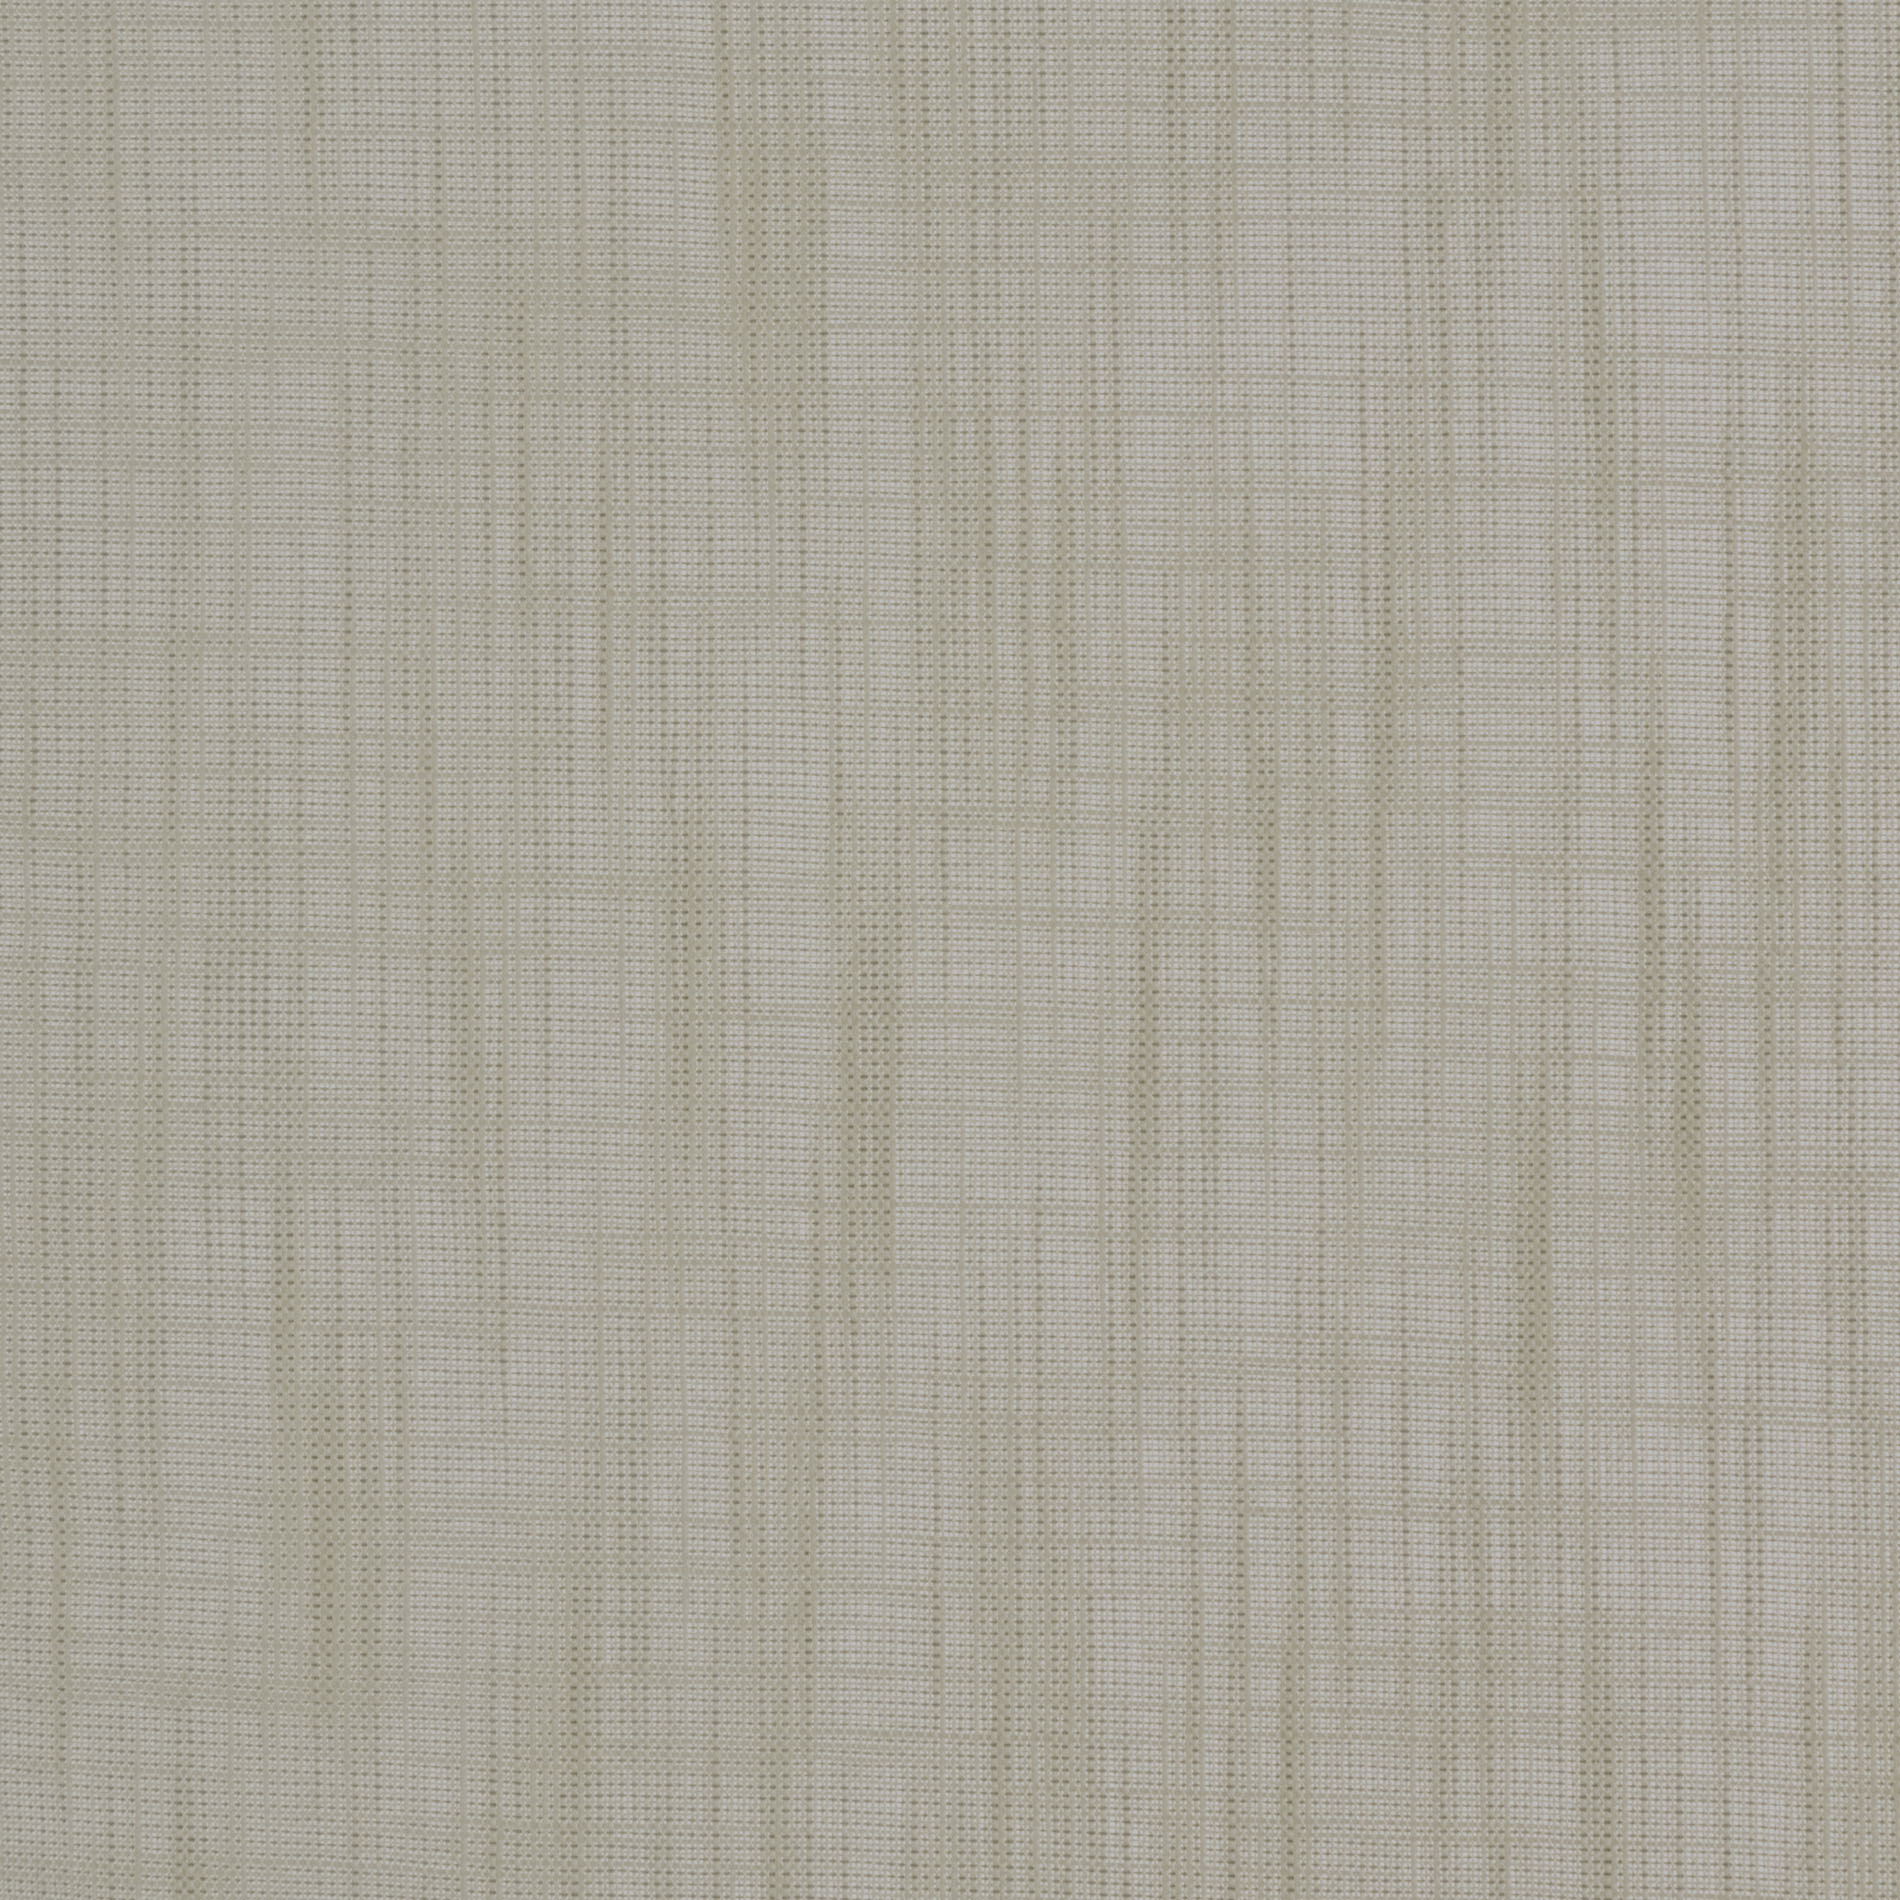 Altex - Fabric - CACHET TRANSPARENT - Sparkly Silver - 1420